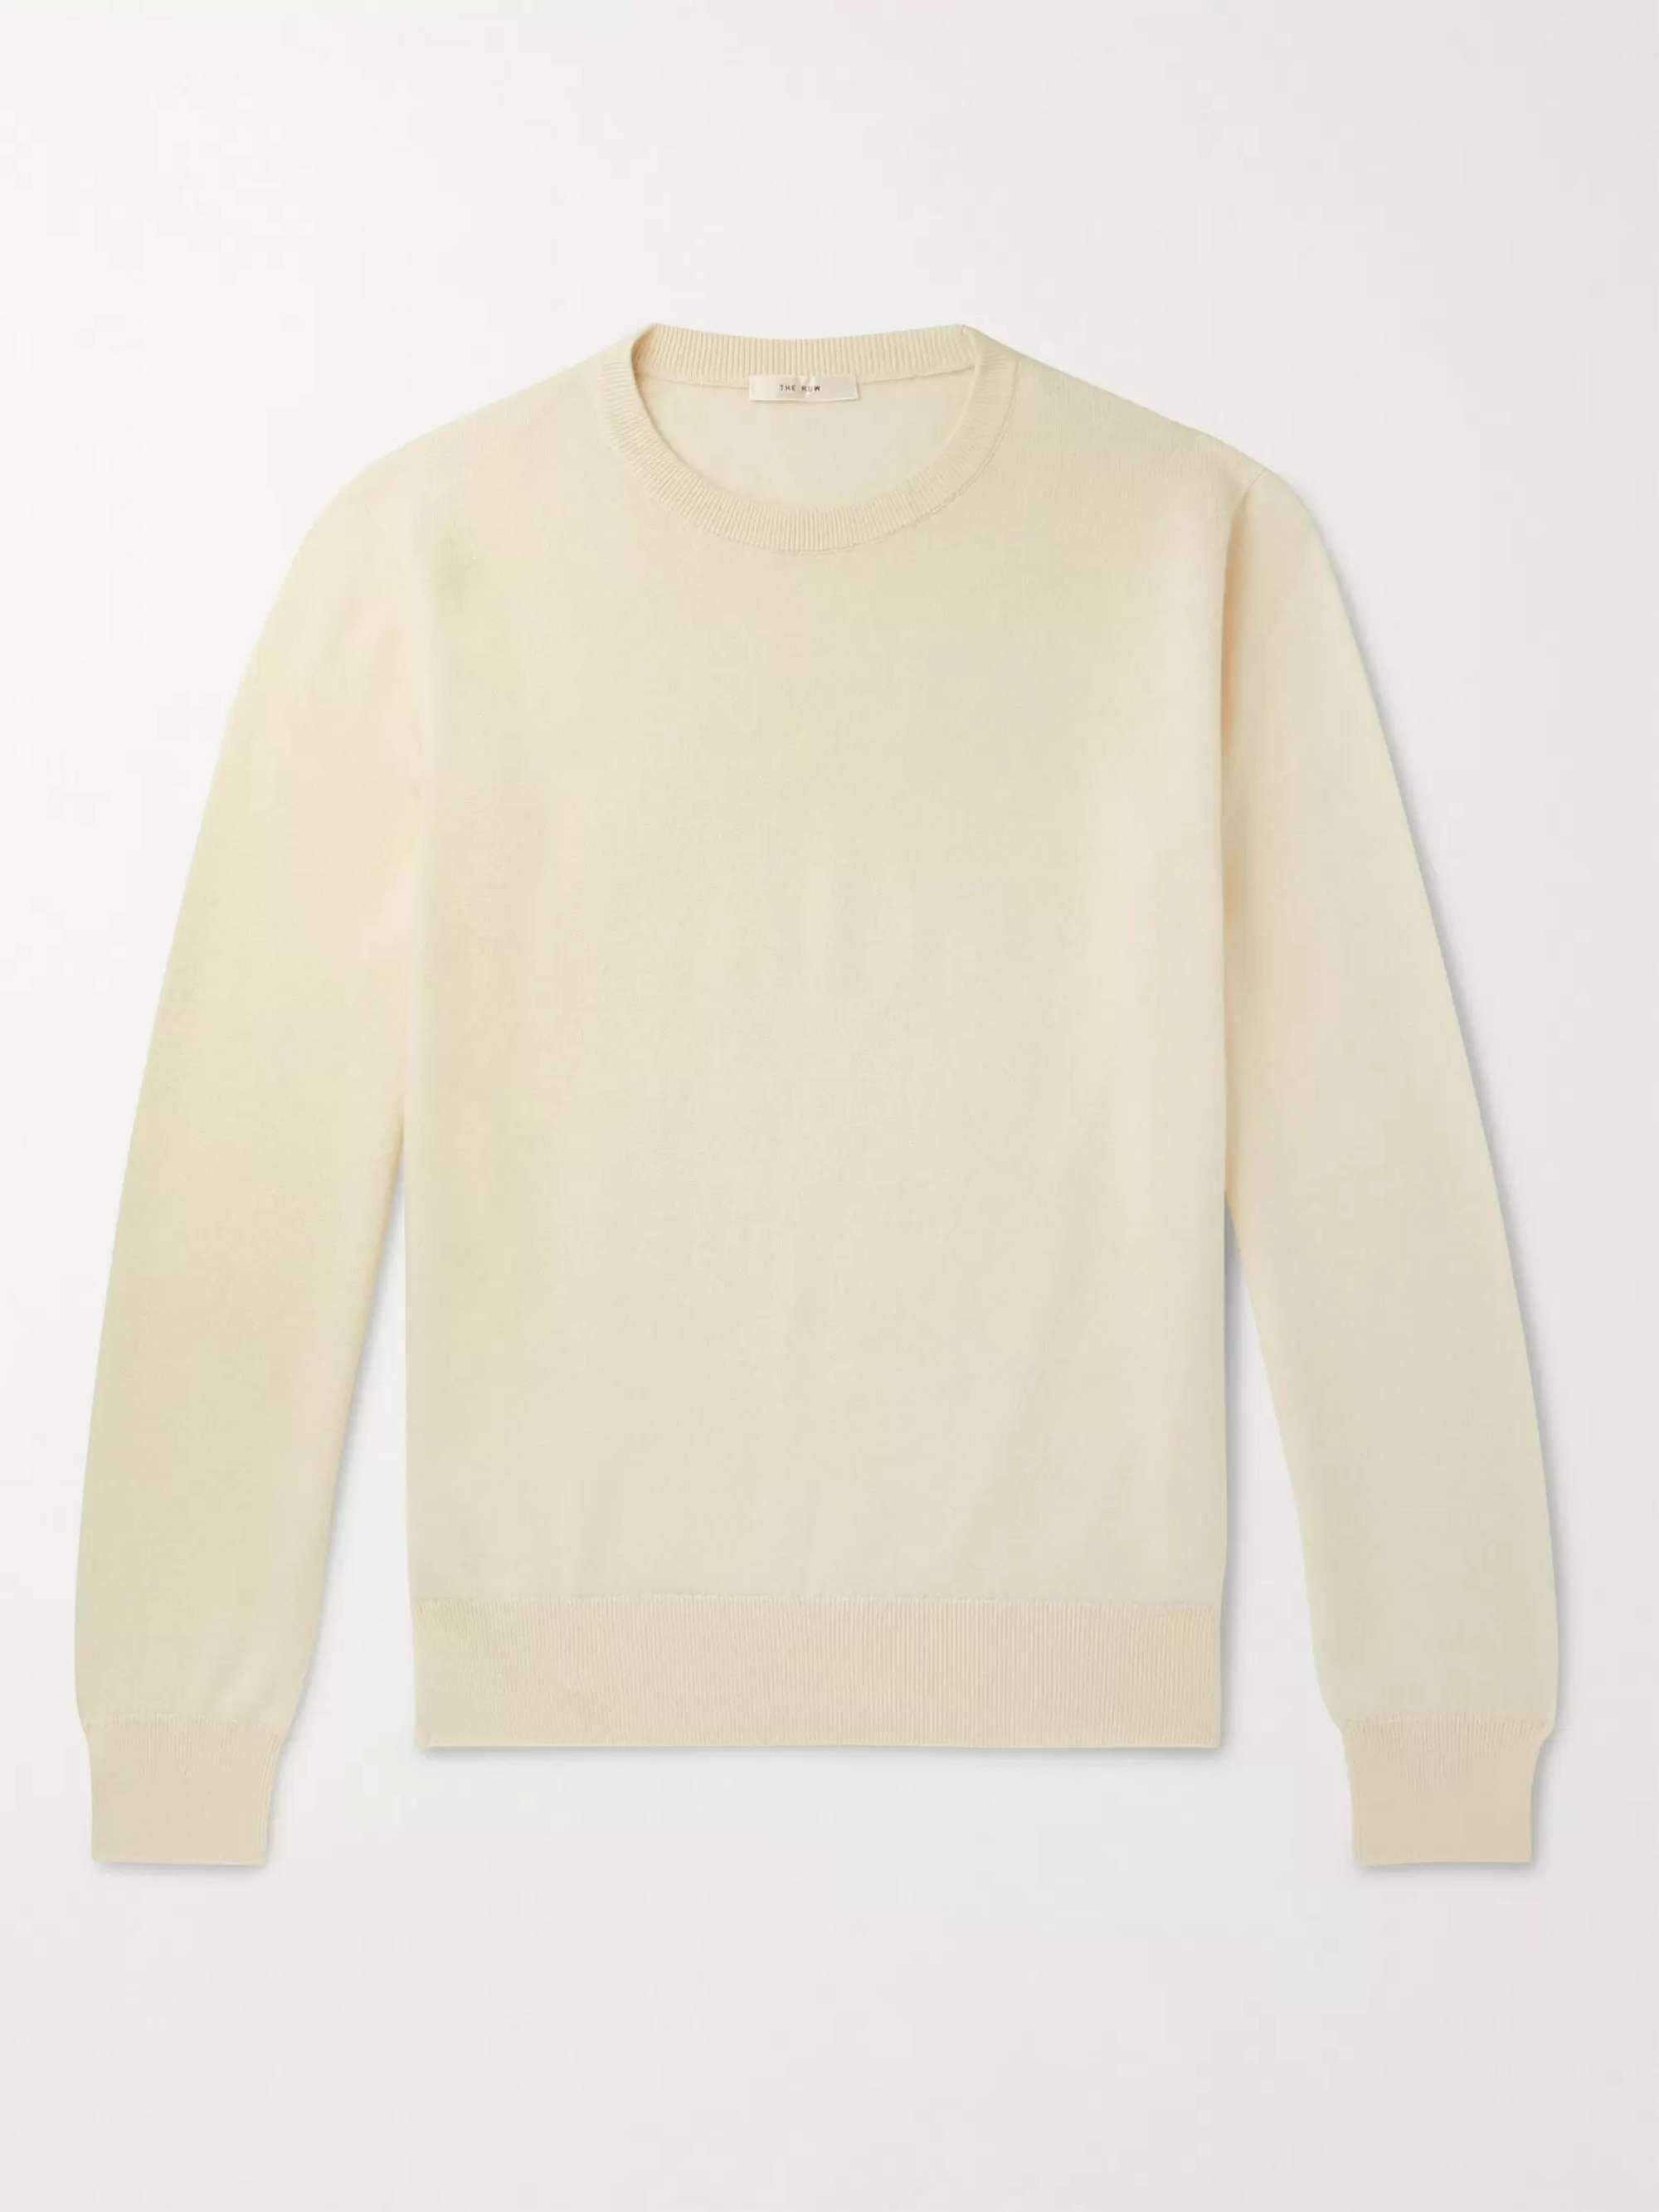 THE ROW Benji Cashmere Sweater for Men | MR PORTER